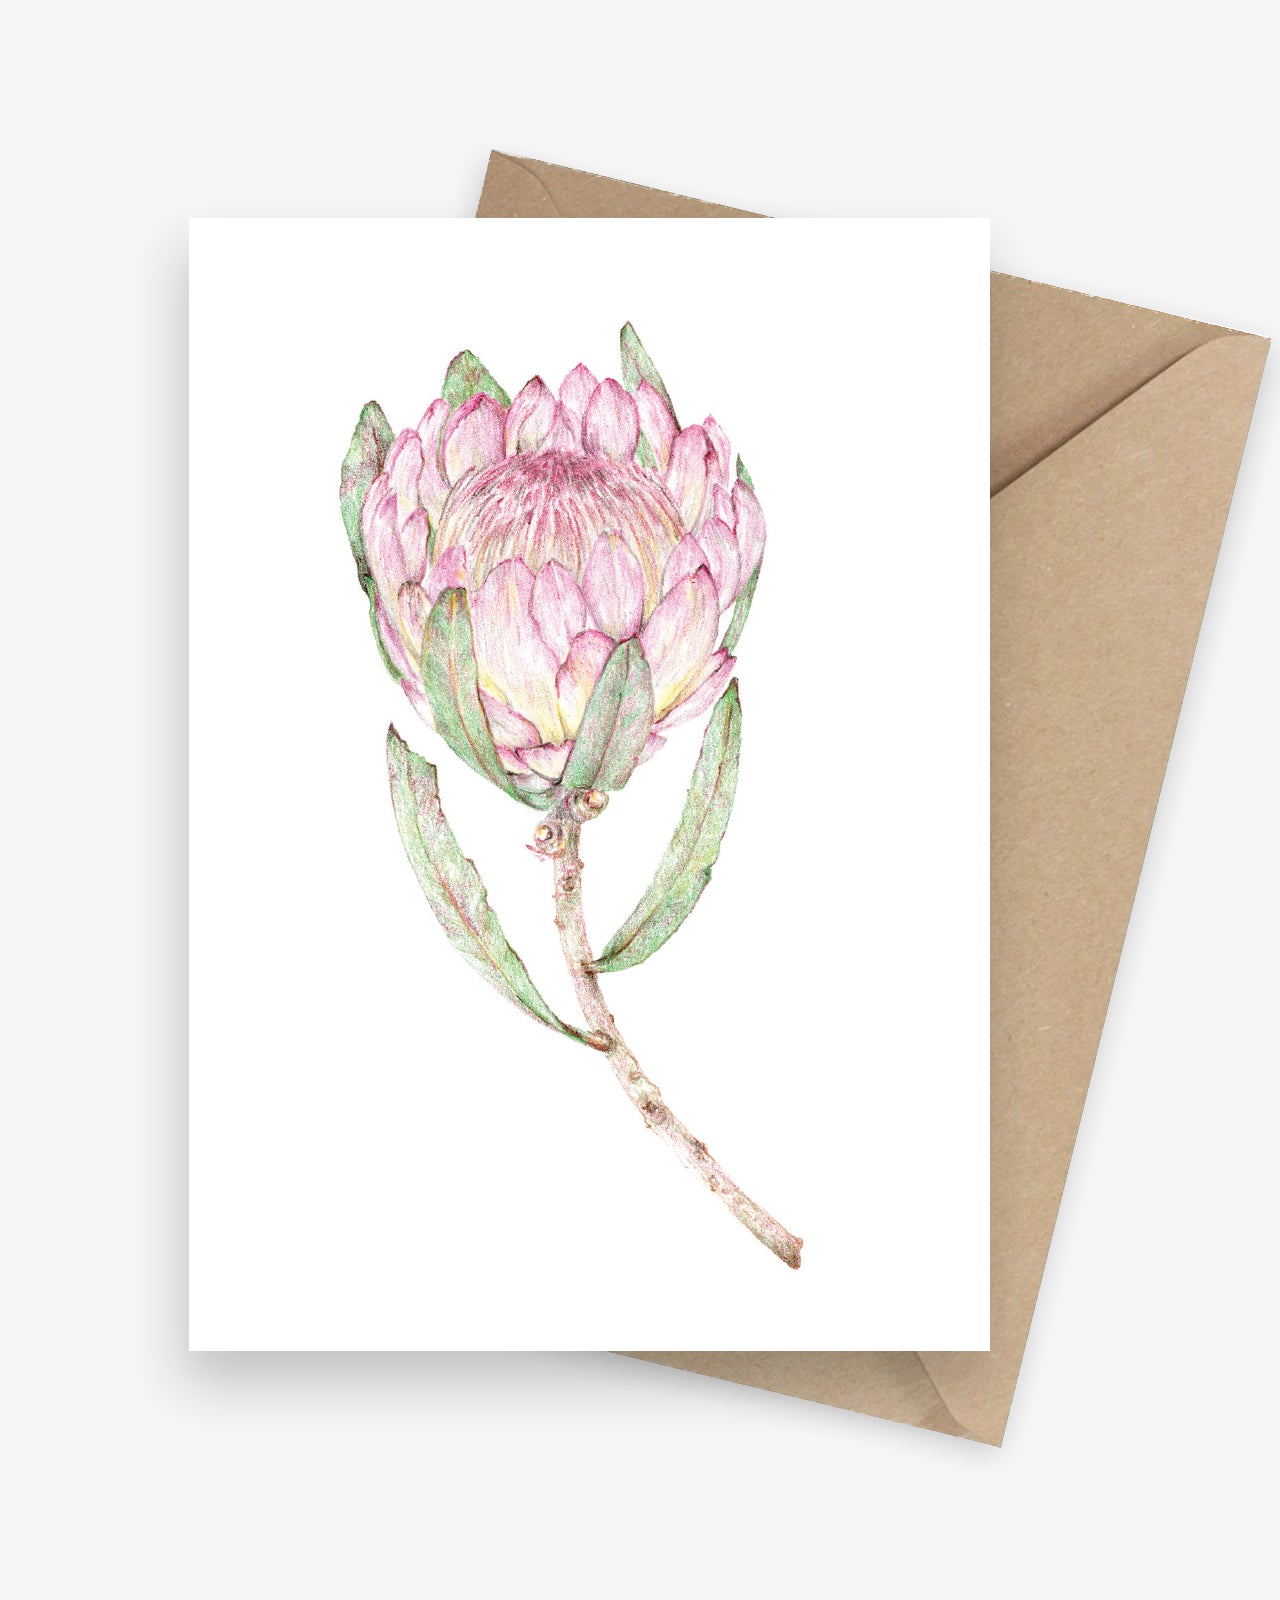 Protea Greeting Card